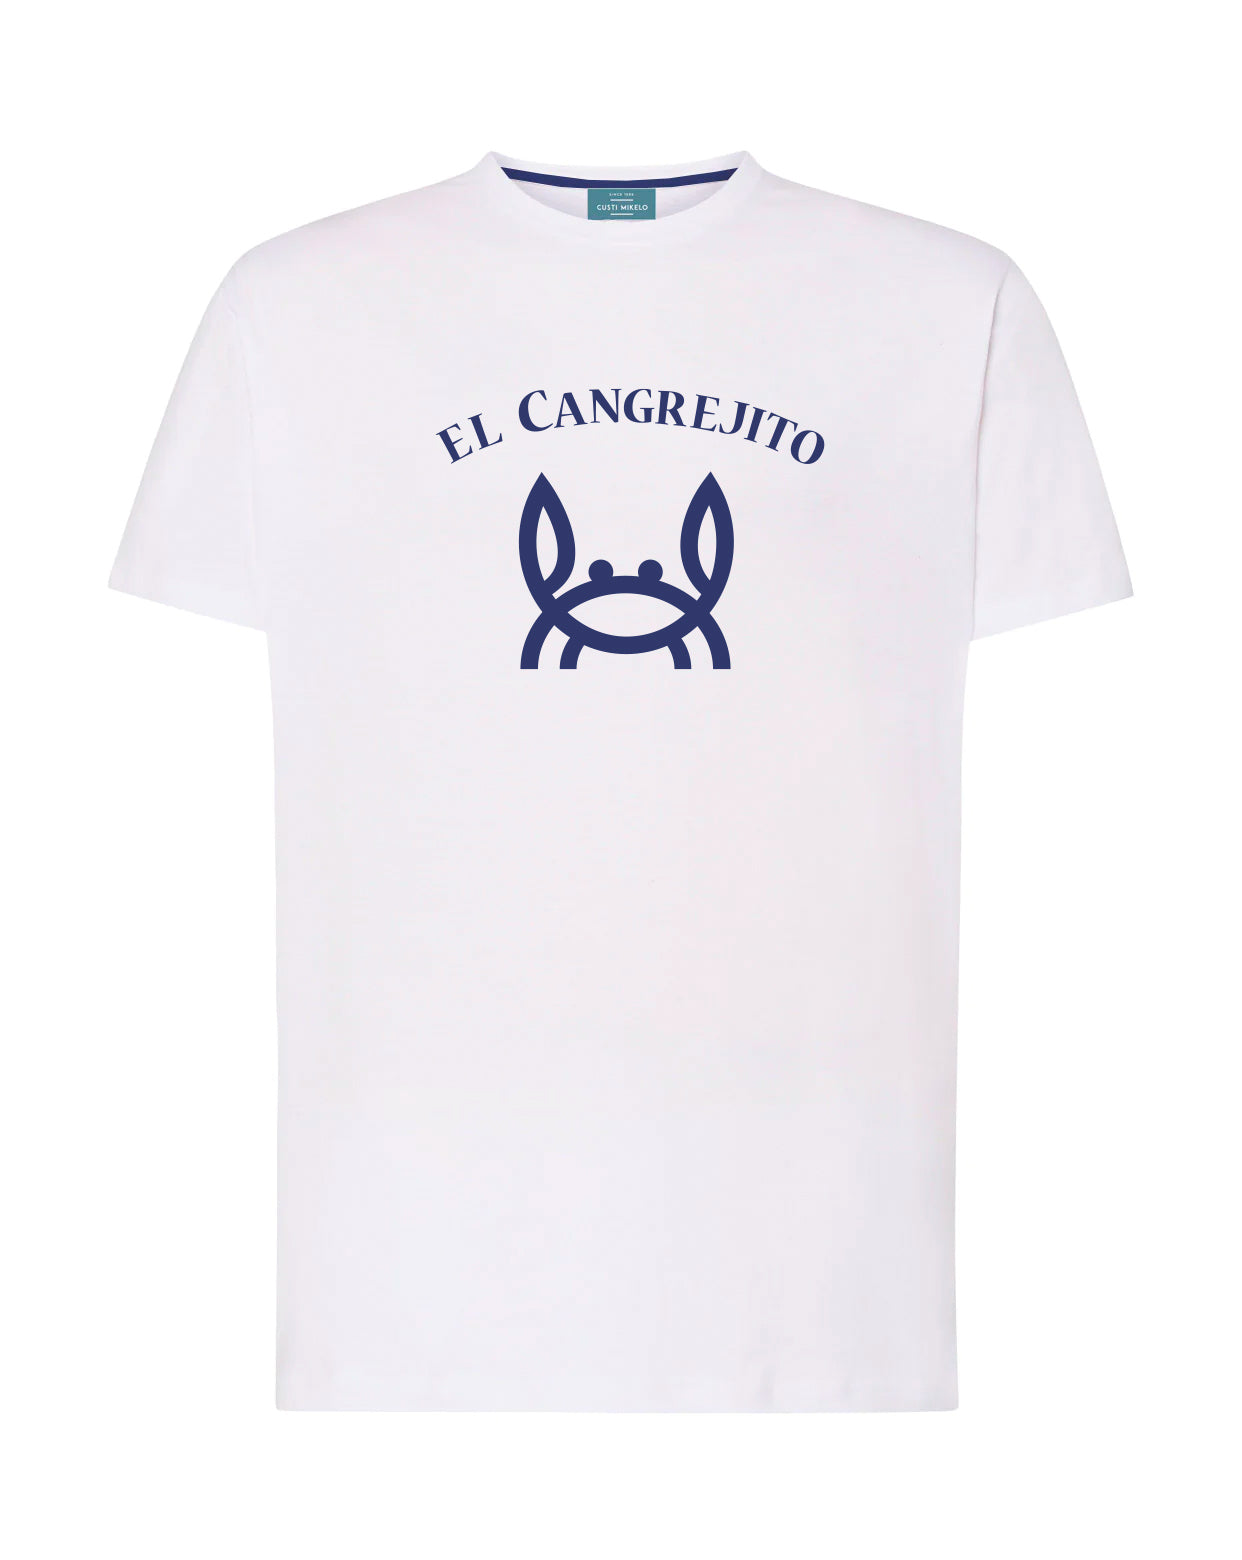 Camiseta cangrejito blanca/marino